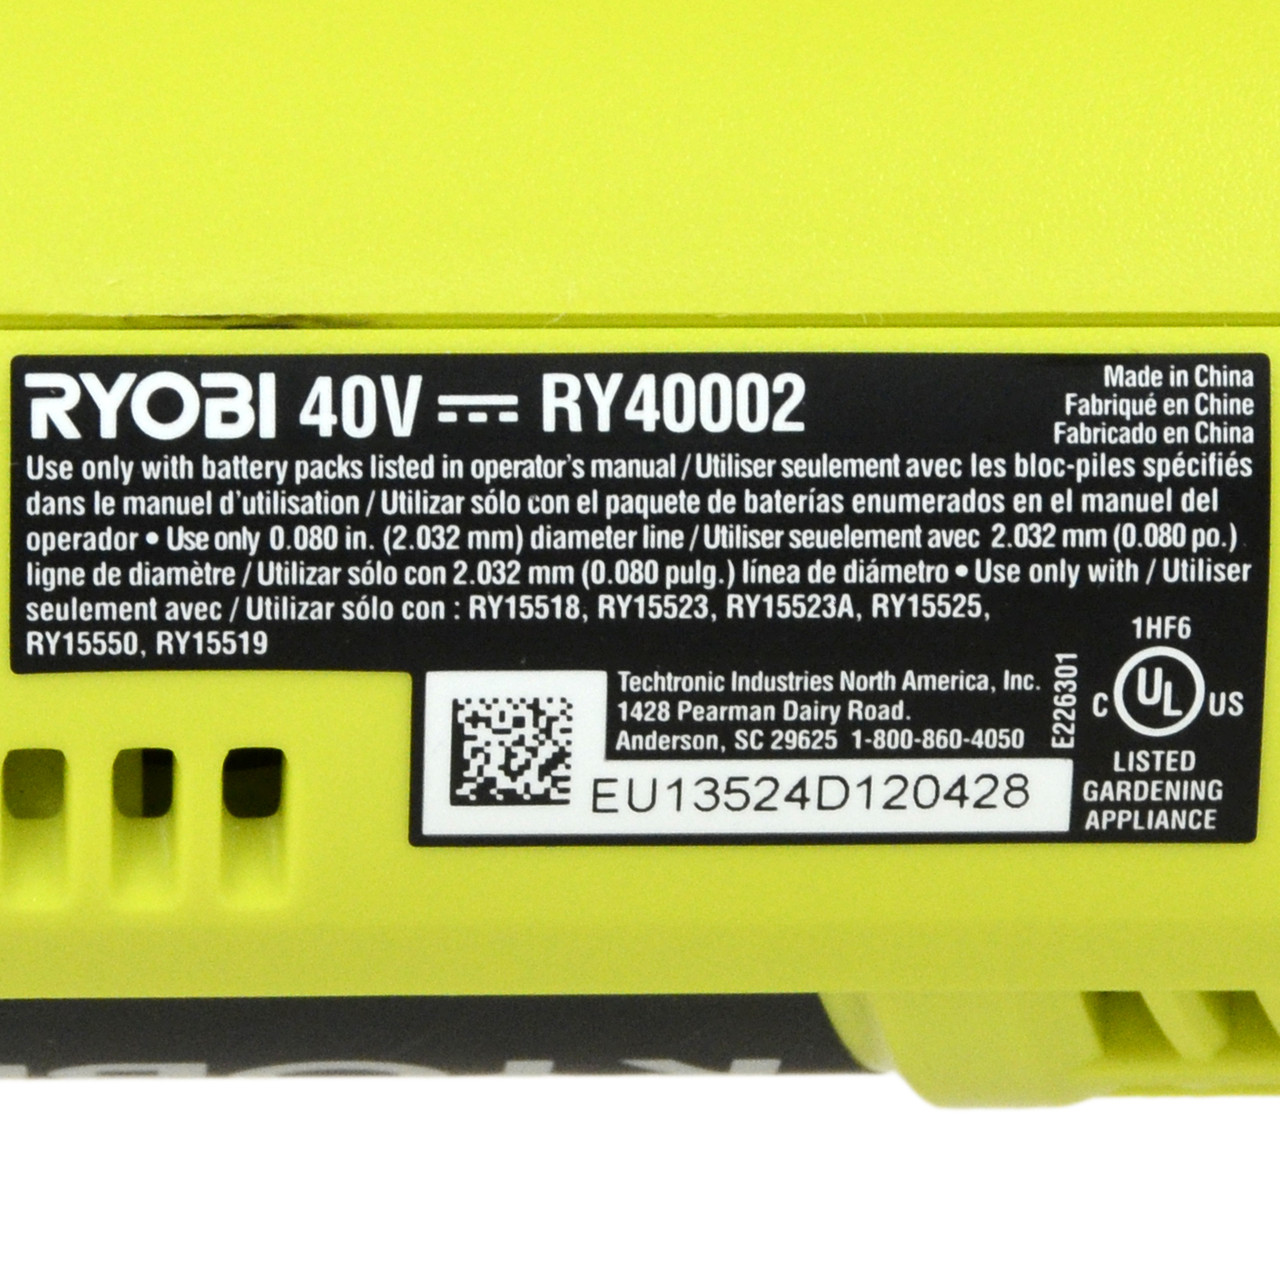 Ryobi 40v Power Head Trimmer Attachment Helton Tool And Home